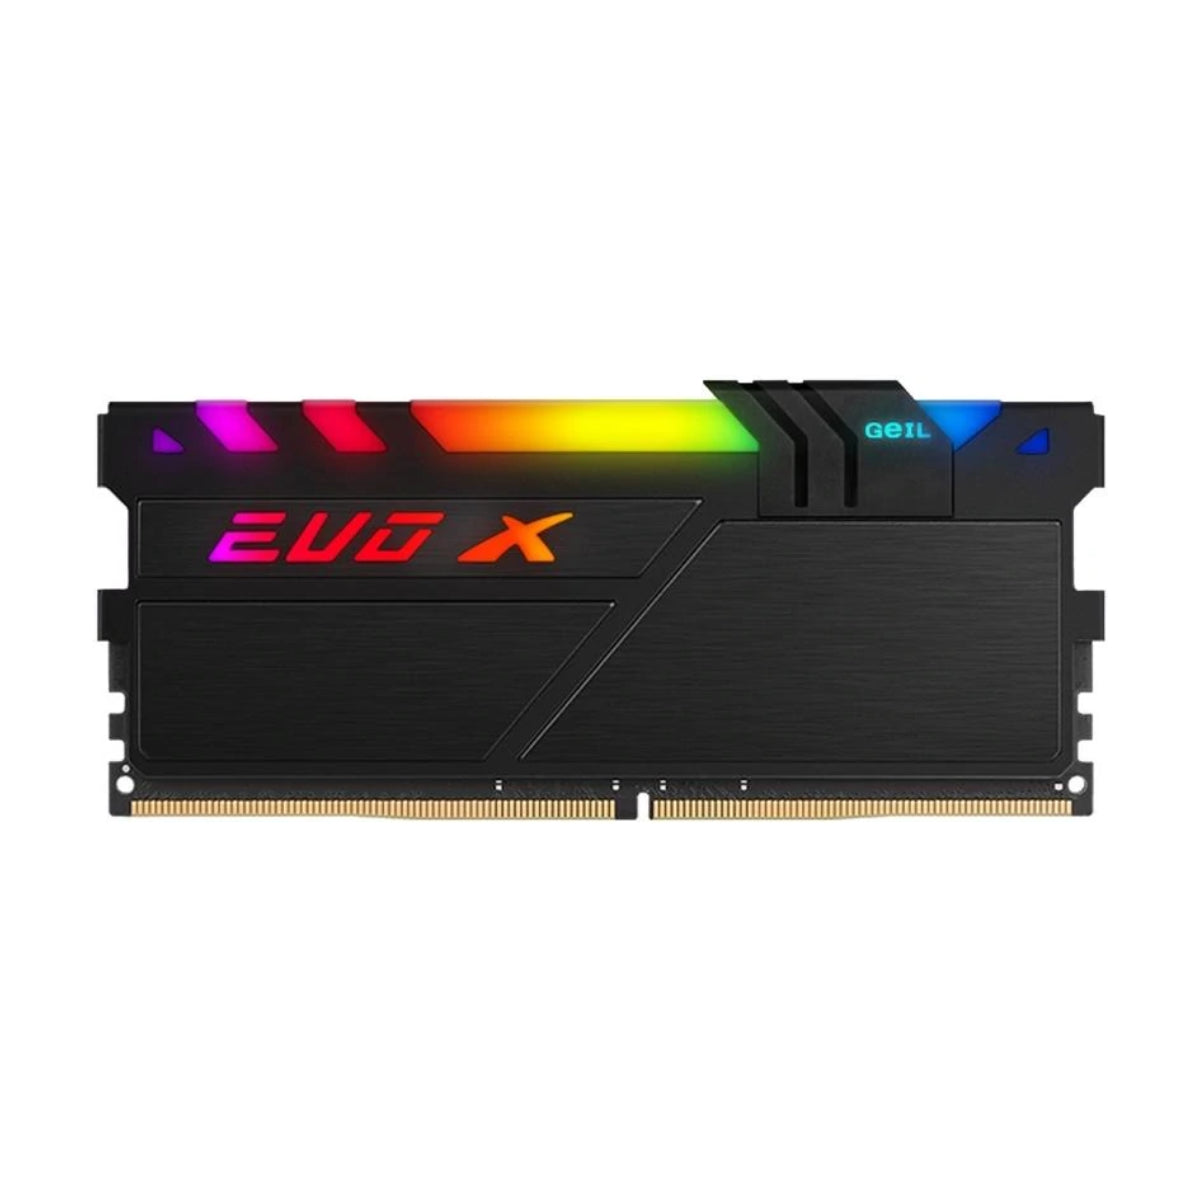 GeIL EVO X II DDR4 8GB 4133Mhz - Black - Store 974 | ستور ٩٧٤